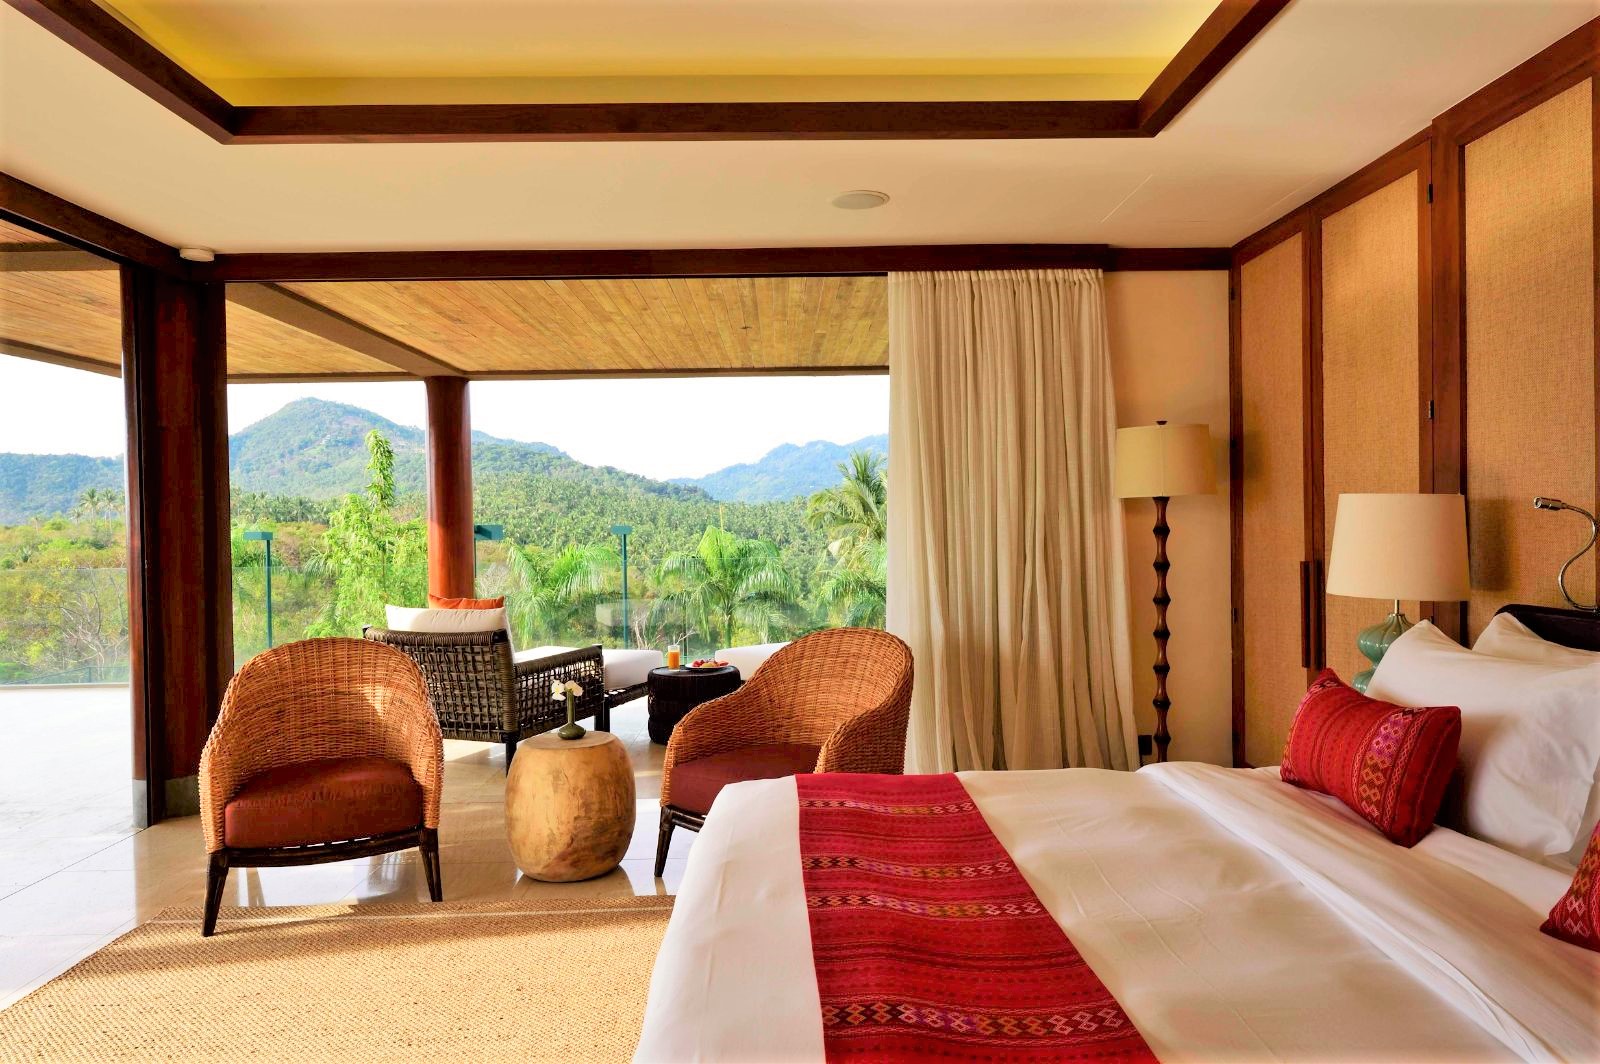 Guest suite bedroom at Praana Residence on Koh Samui in Thailand